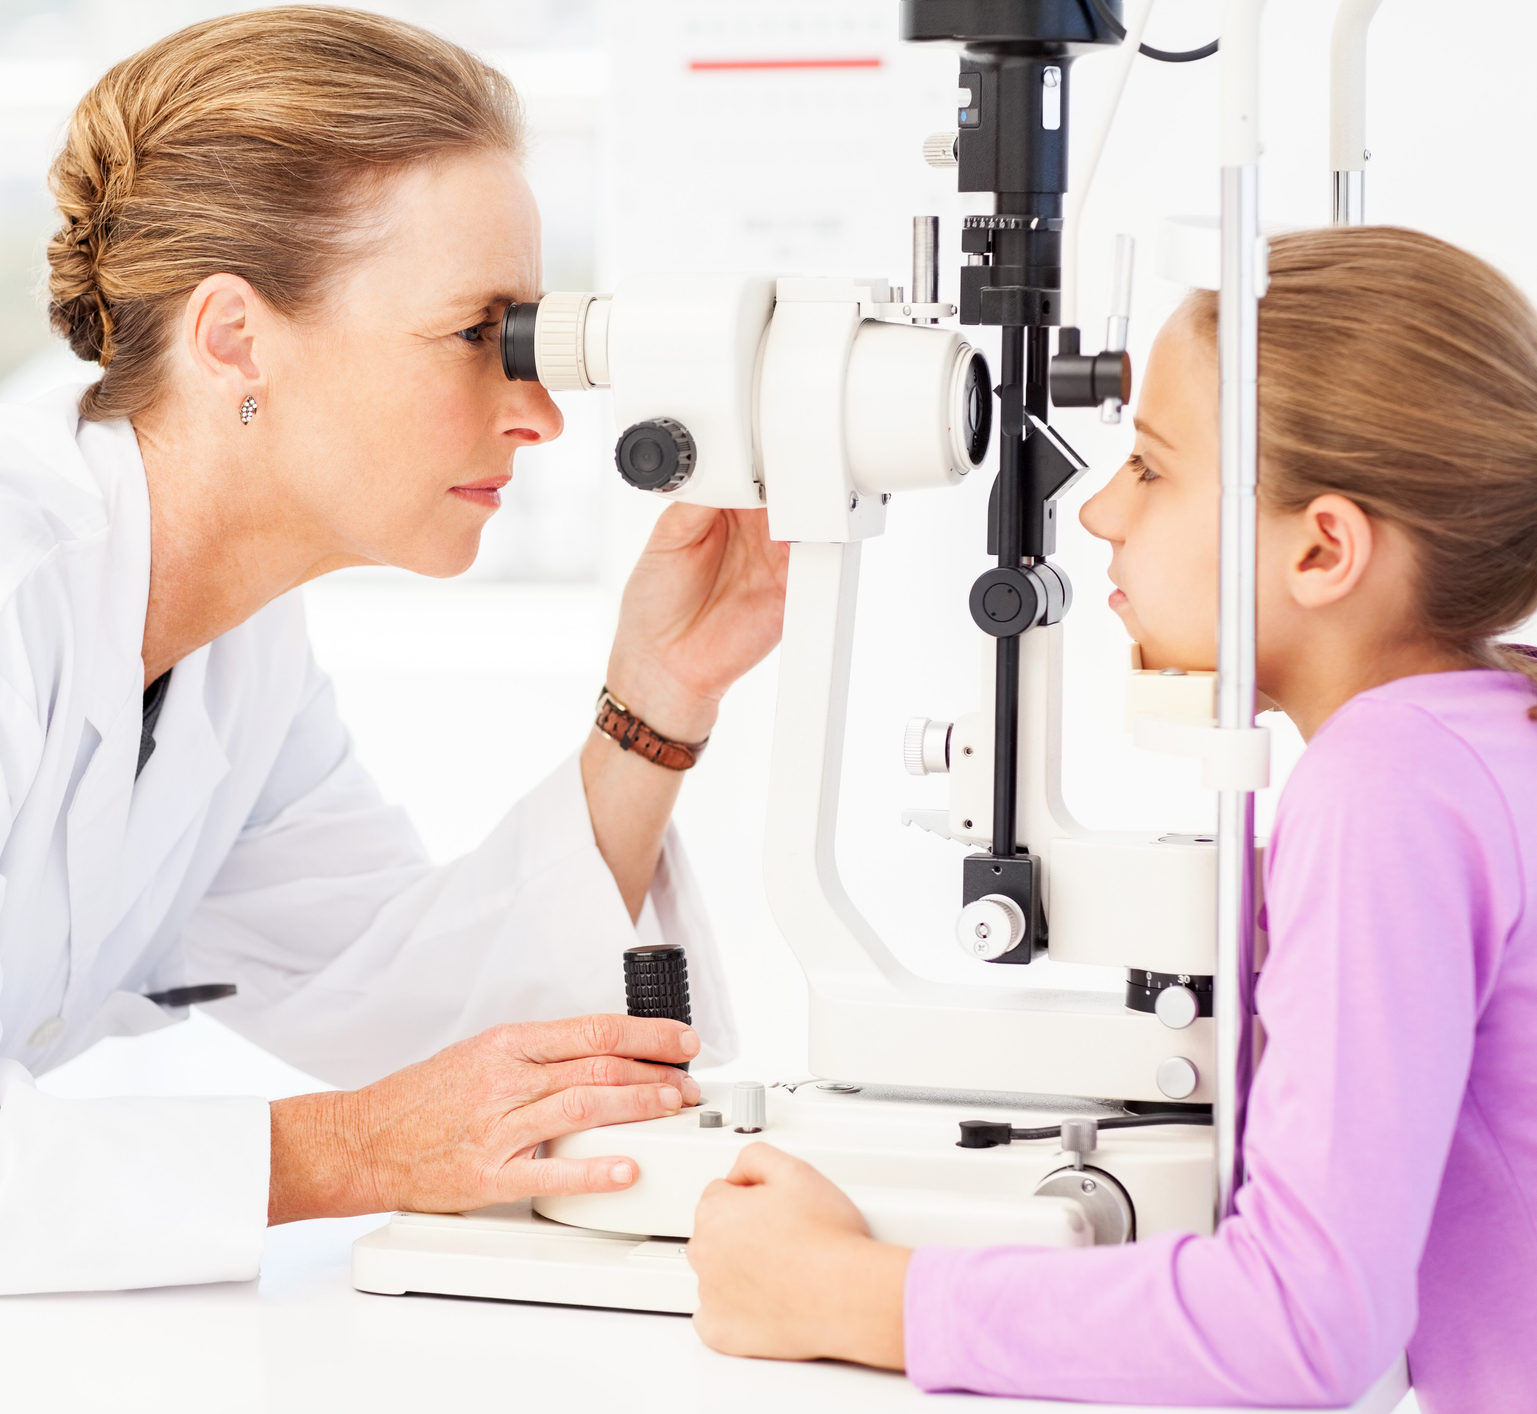 Optometrist Examining Girl’s Eyes With Slit Lamp